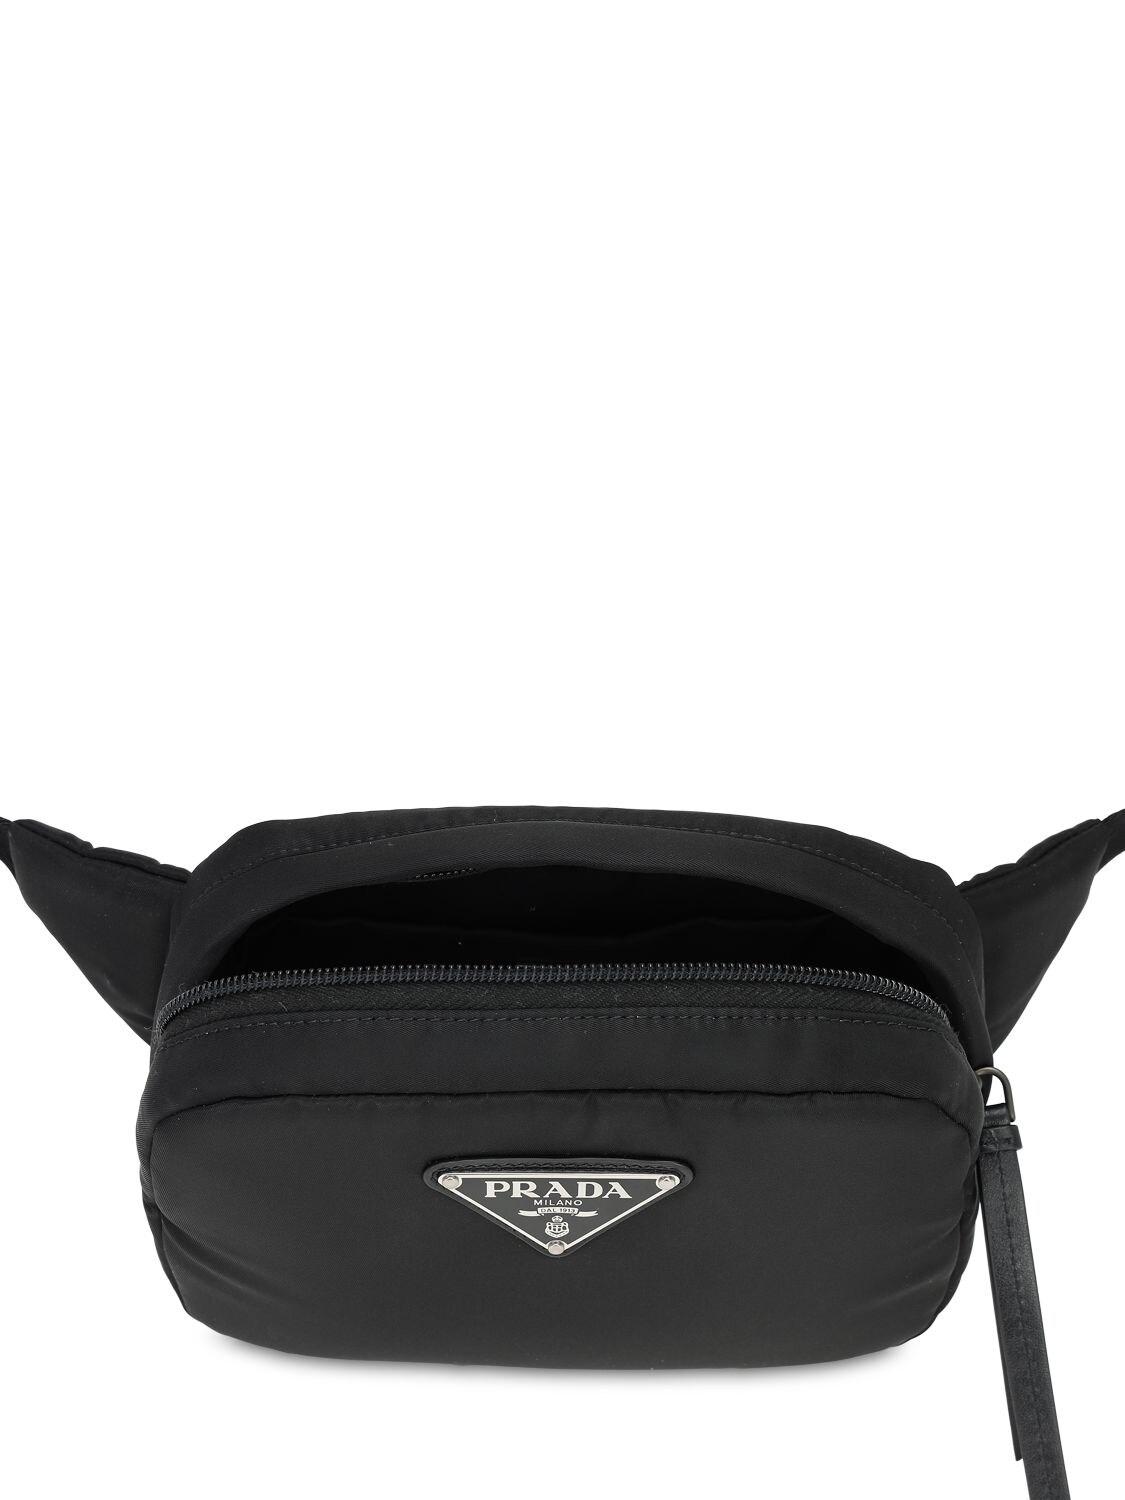 Prada Padded Nylon Belt Bag in Black